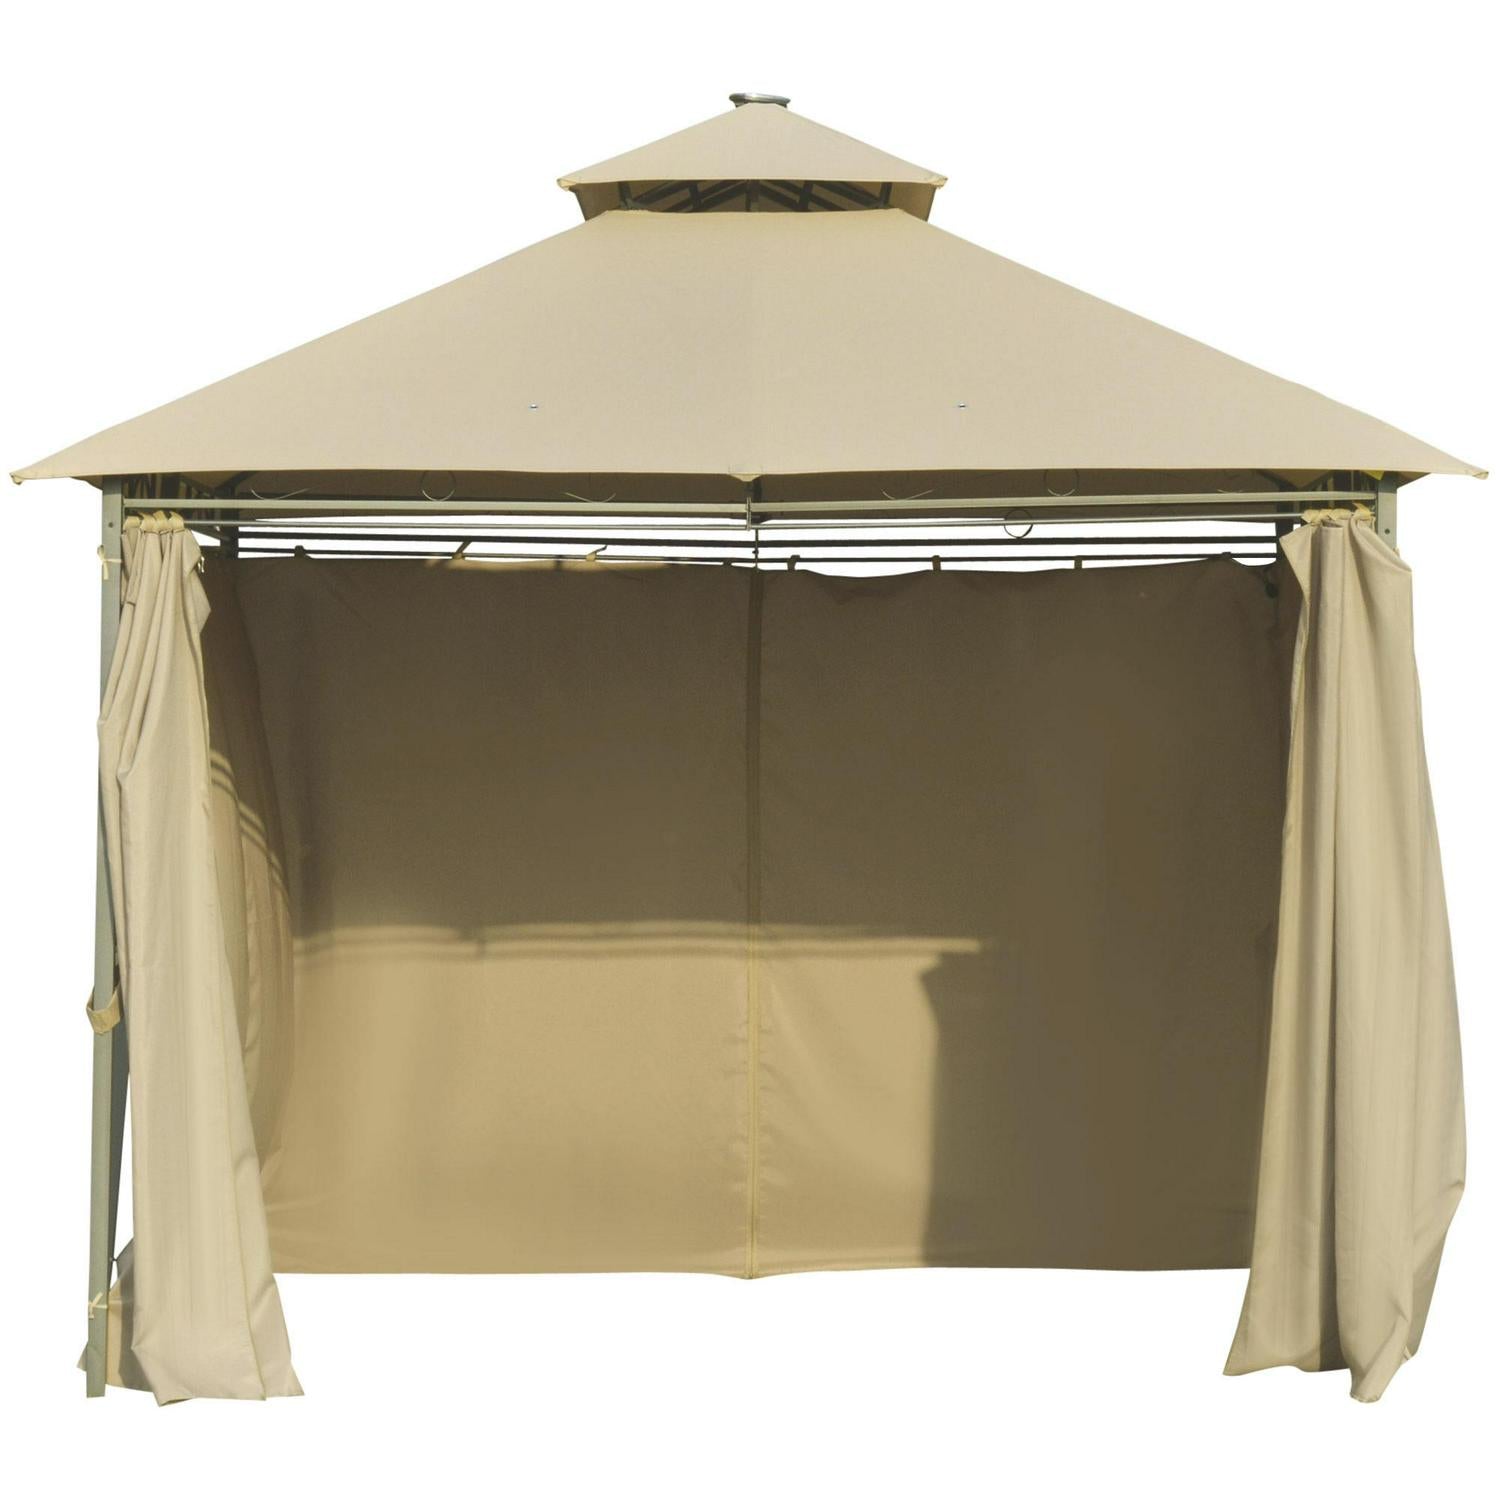 Outdoor Gazebo Canopy Party Tent Garden Pavilion Patio Shelter- Khaki